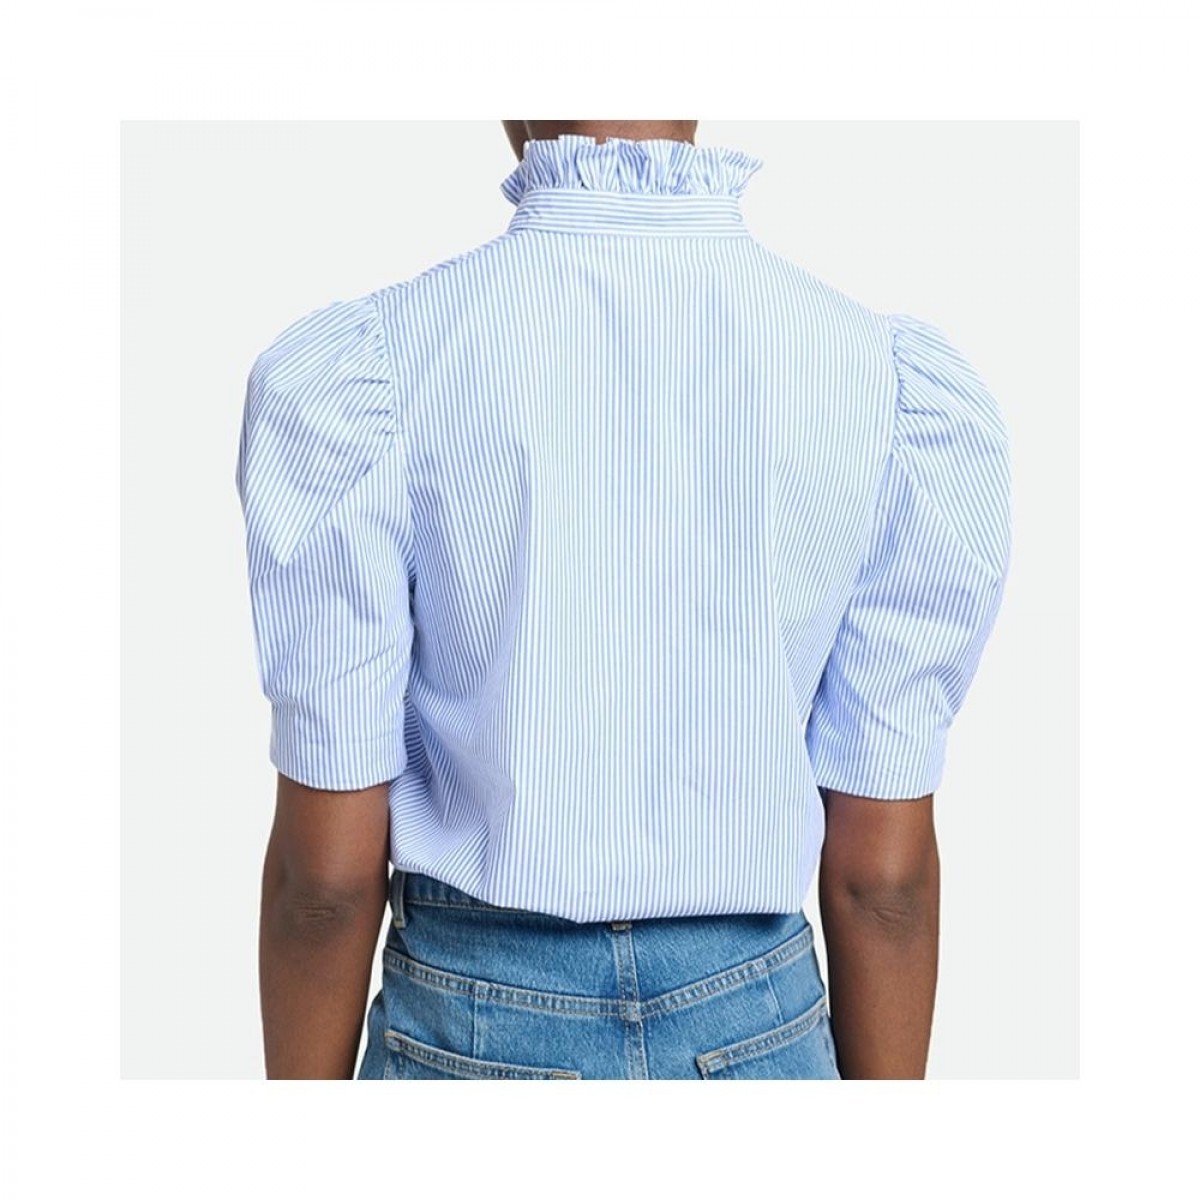 samuel shirt - blance blue - model ryg